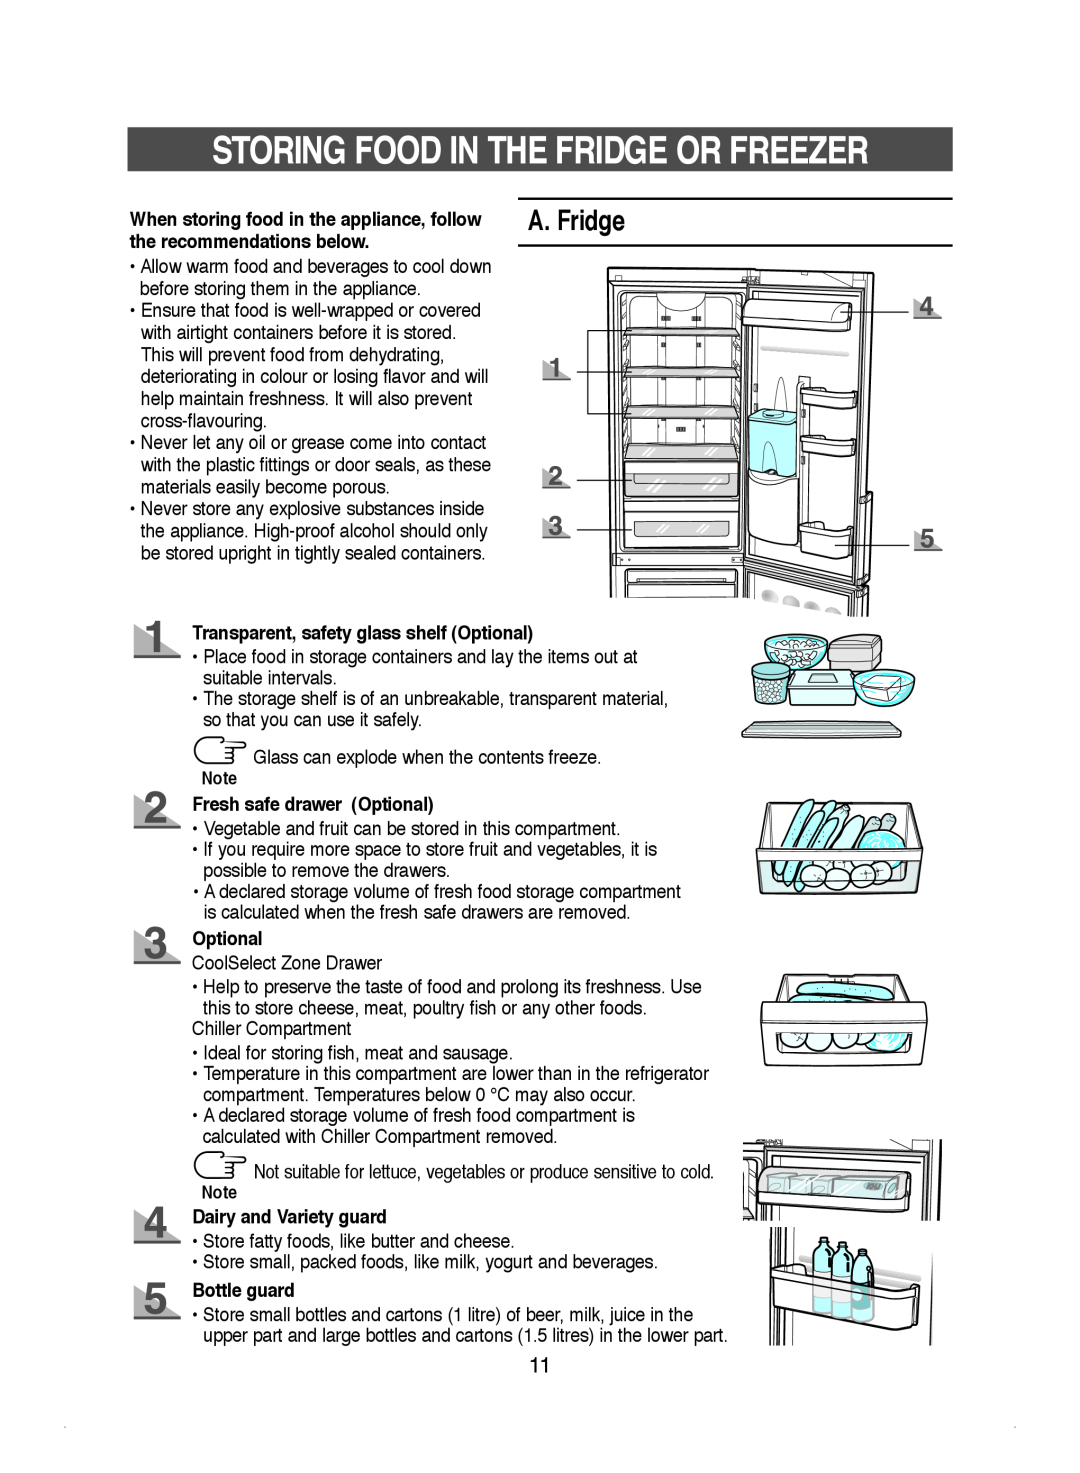 Samsung DA99-01220J Storing Food In The Fridge Or Freezer, A. Fridge, the recommendations below, Optional, Bottle guard 